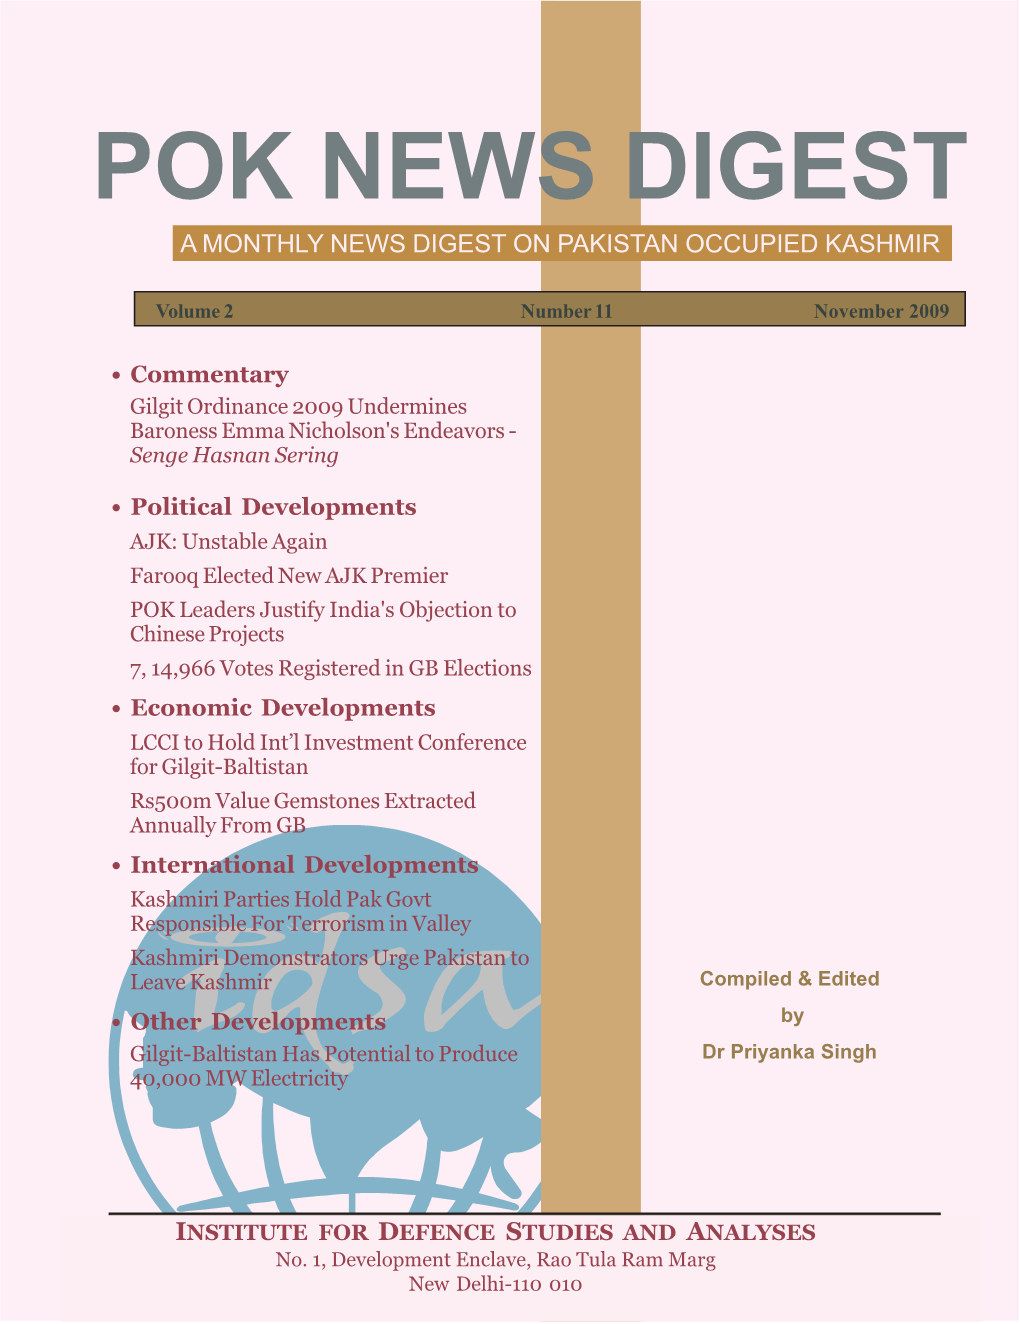 Pok News Digest a Monthly News Digest on Pakistan Occupied Kashmir